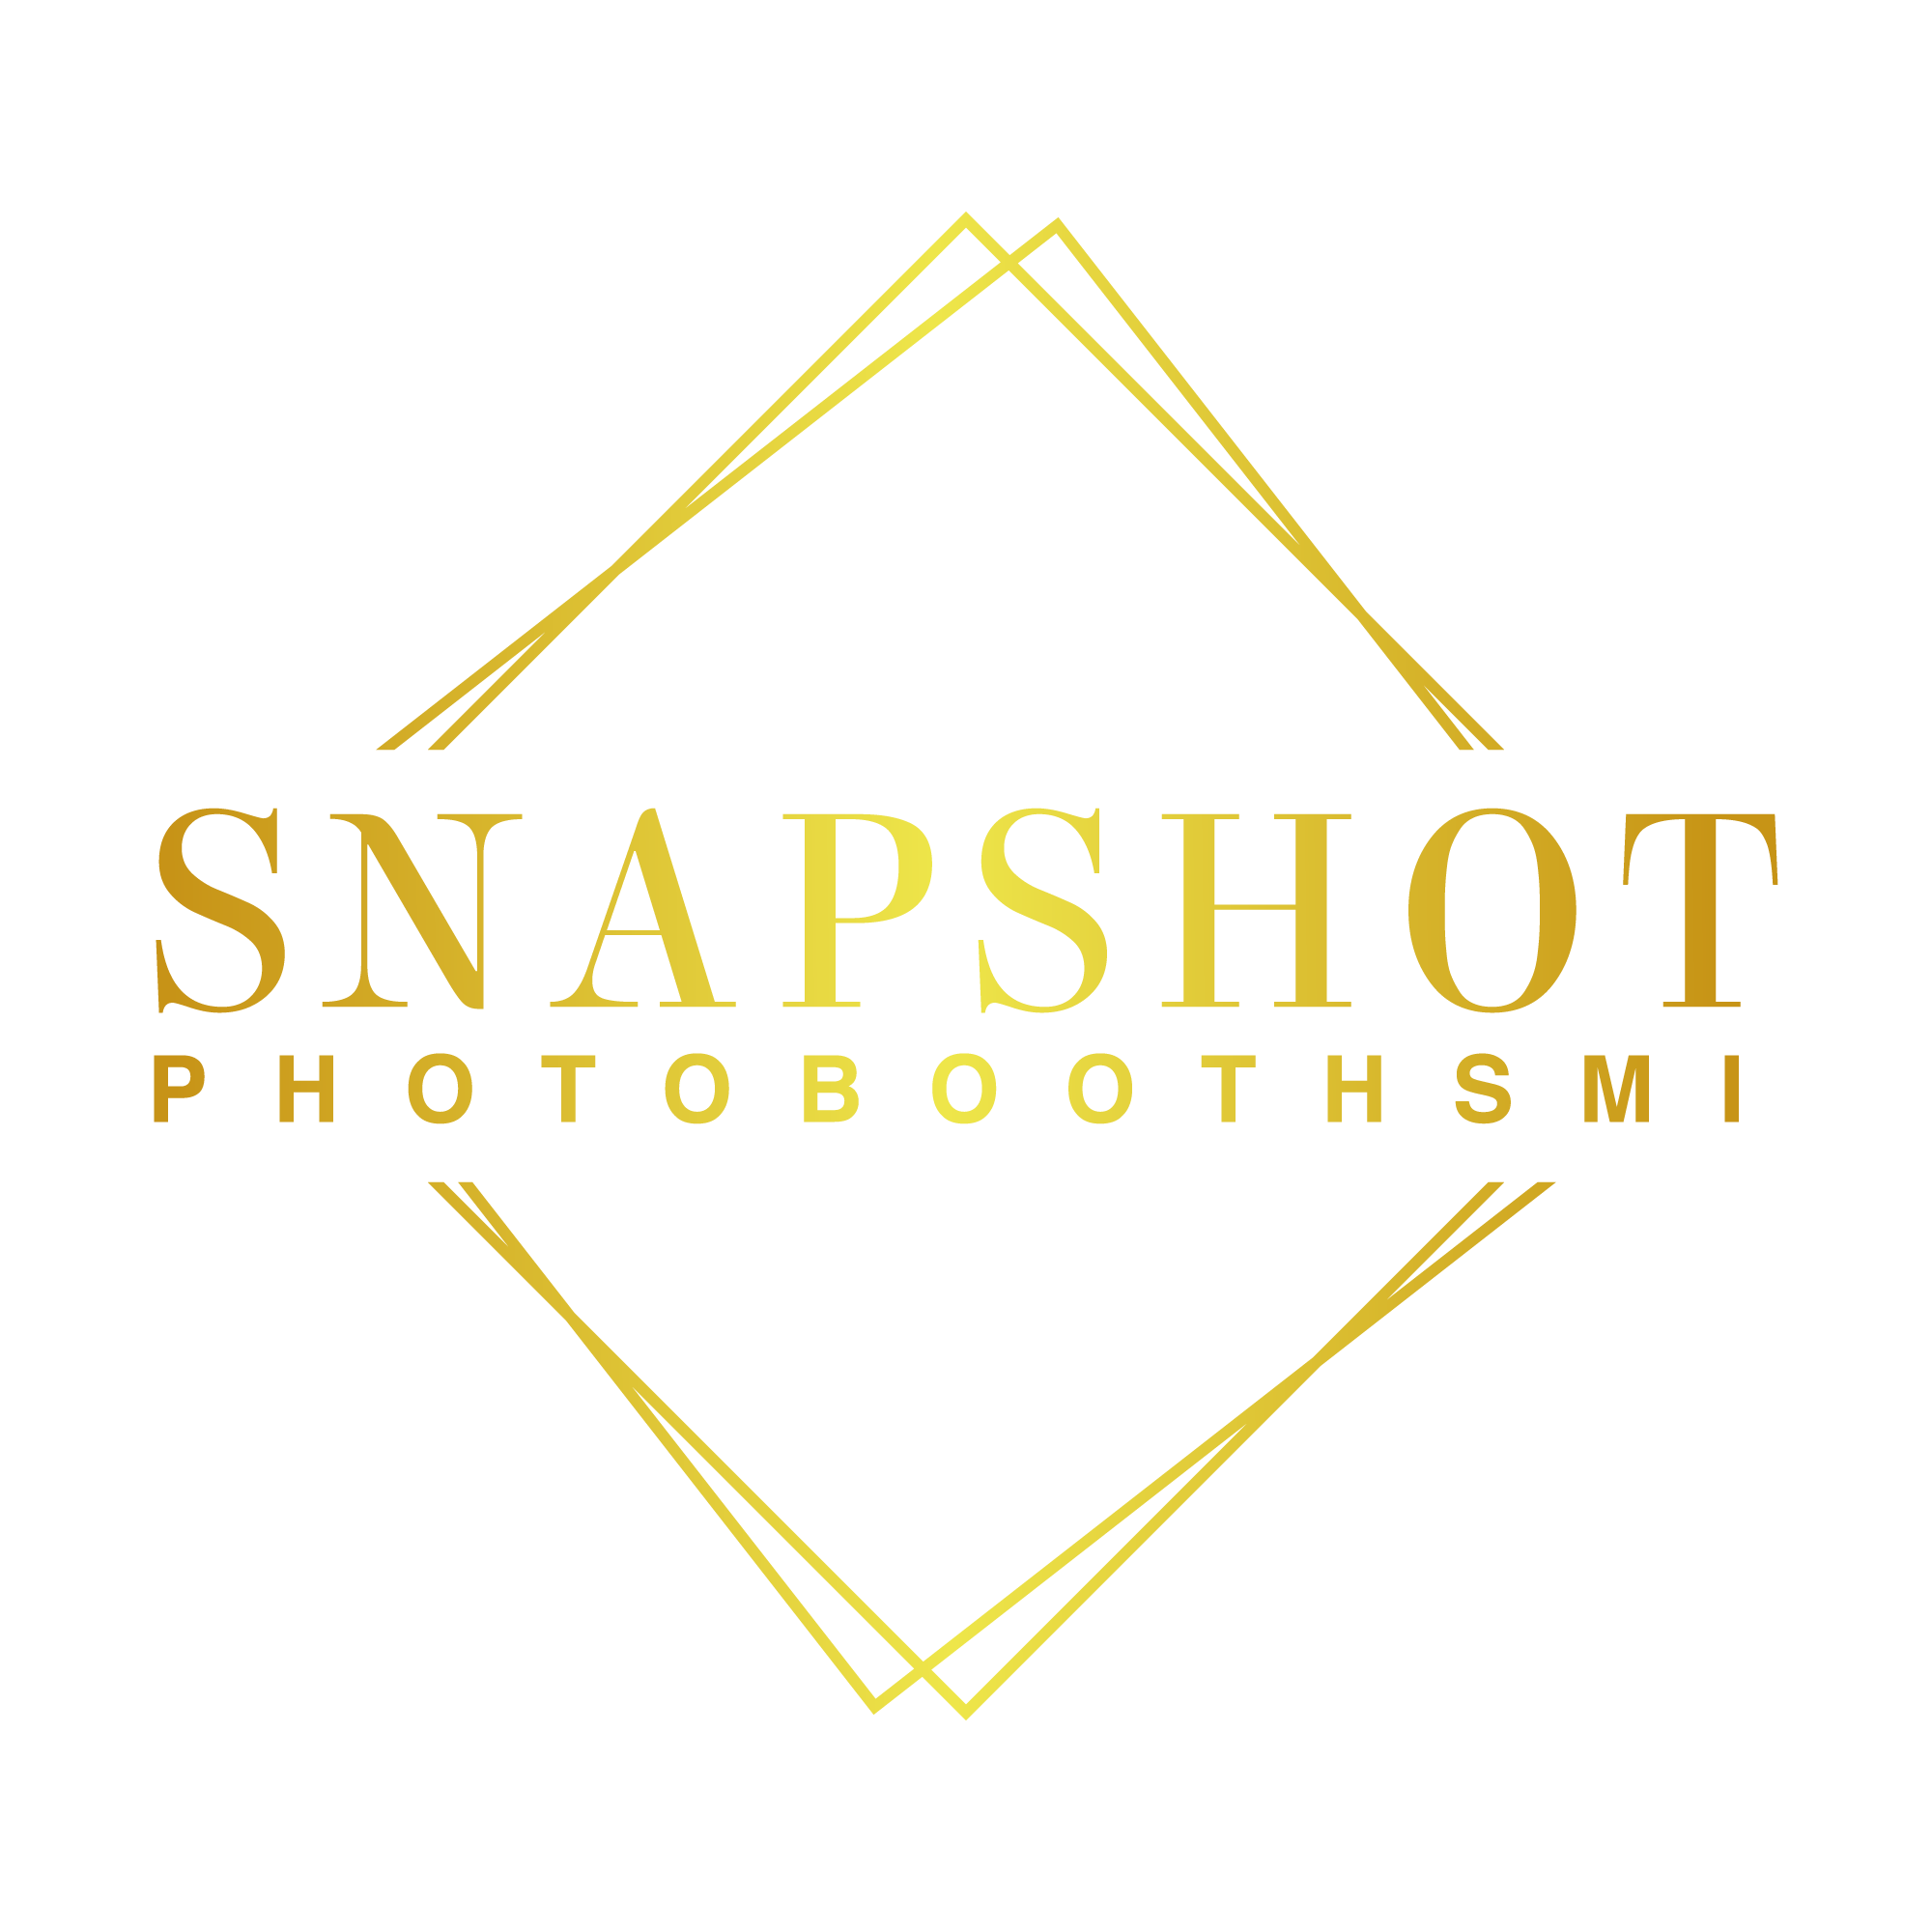 snapshotphotoboothsmi-logo-A.png